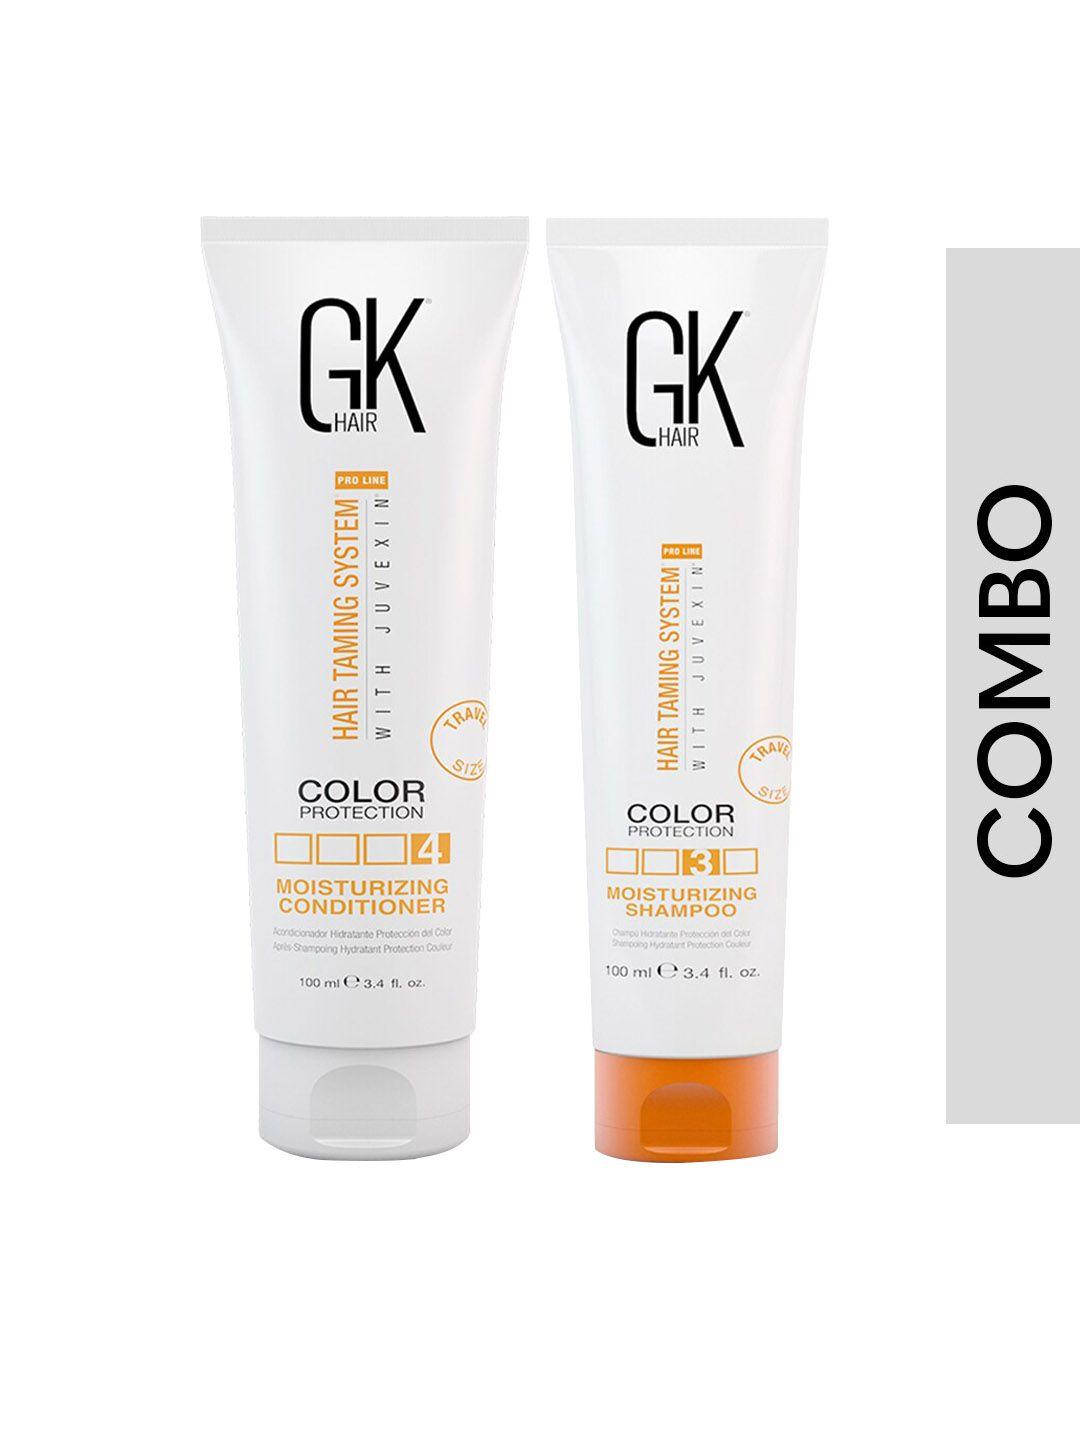 gk-hair-set-of-color-protection-hair-moisturizing-shampoo-&-conditioner---100-ml-each